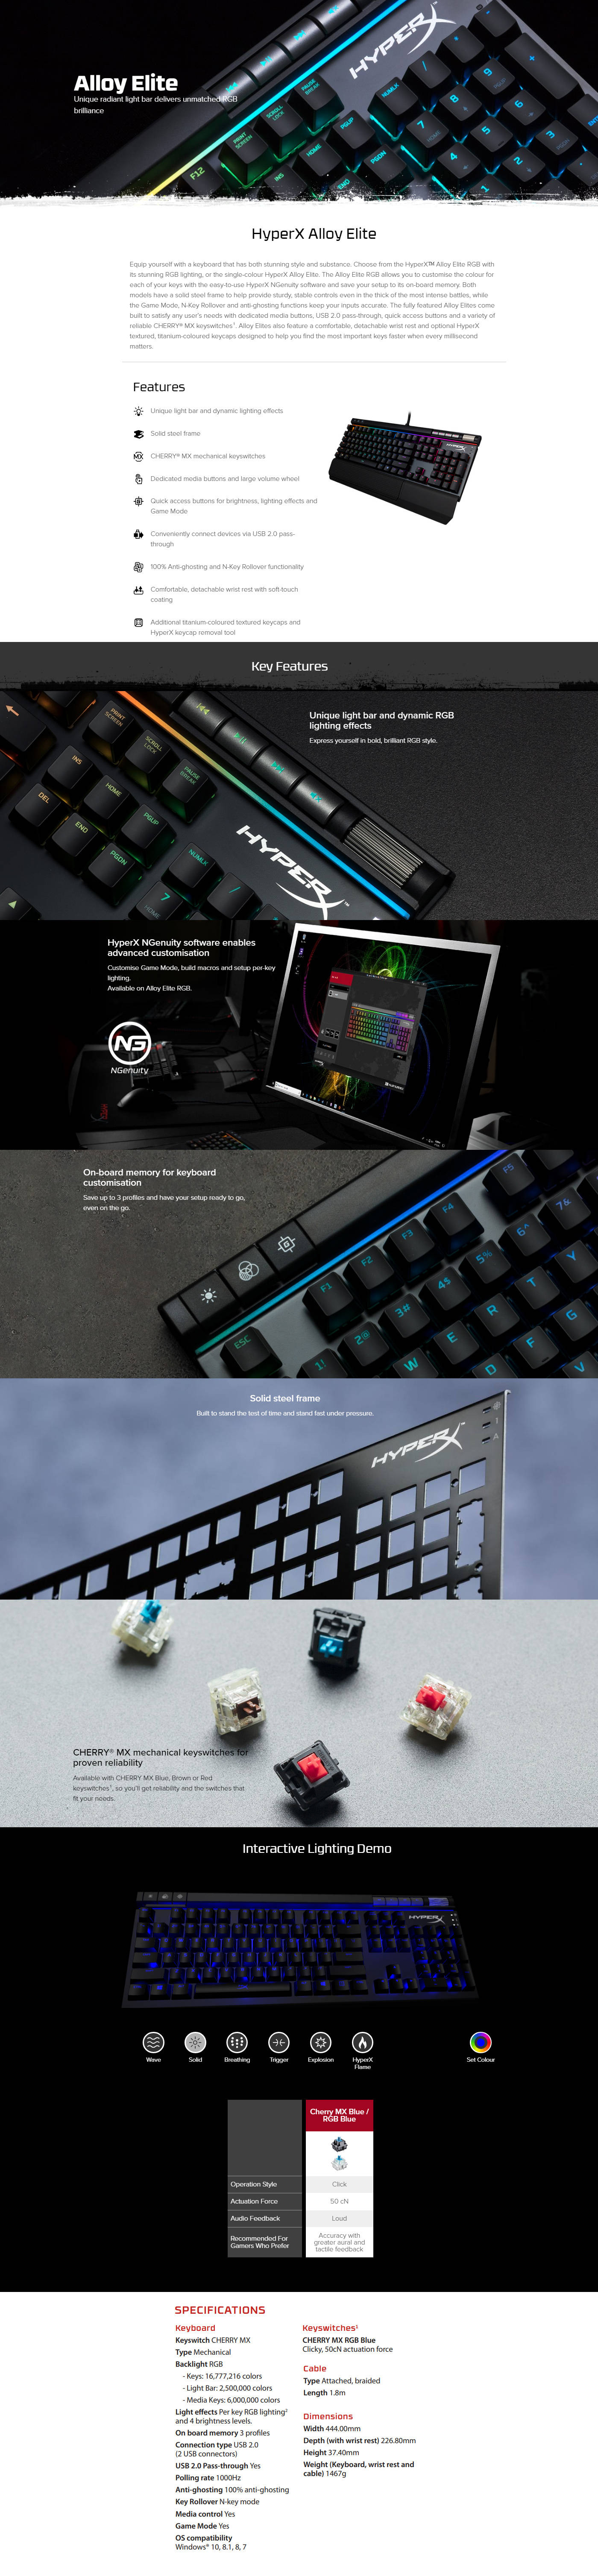  Buy Online HyperX Alloy Elite RGB Mechanical Gaming Keyboard - Cherry MX RGB Blue